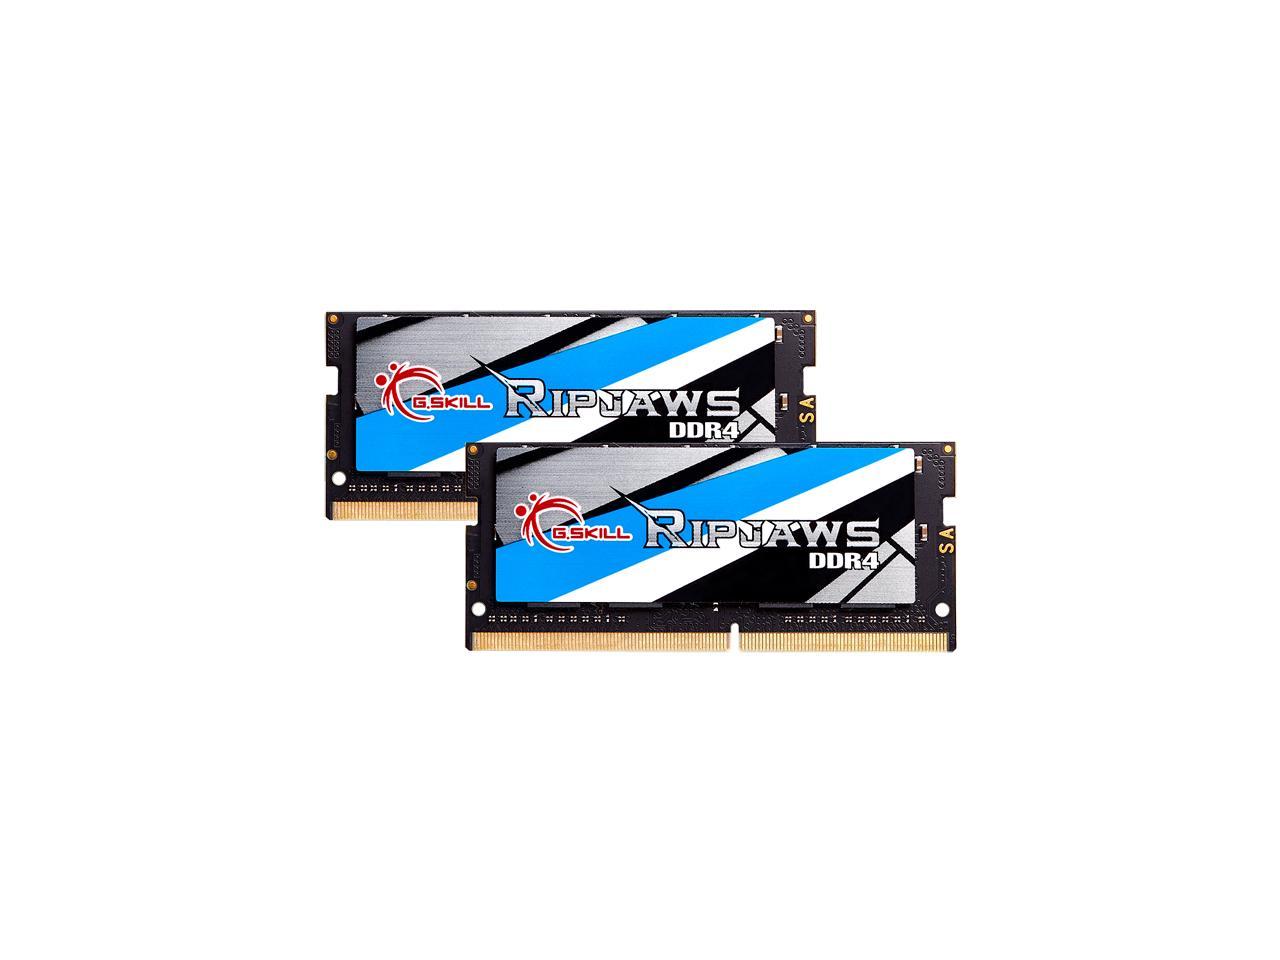 32GB (2x16GB) G.Skill Ripjaws Series DDR4 3200 Laptop Memory $57 + Free Shipping